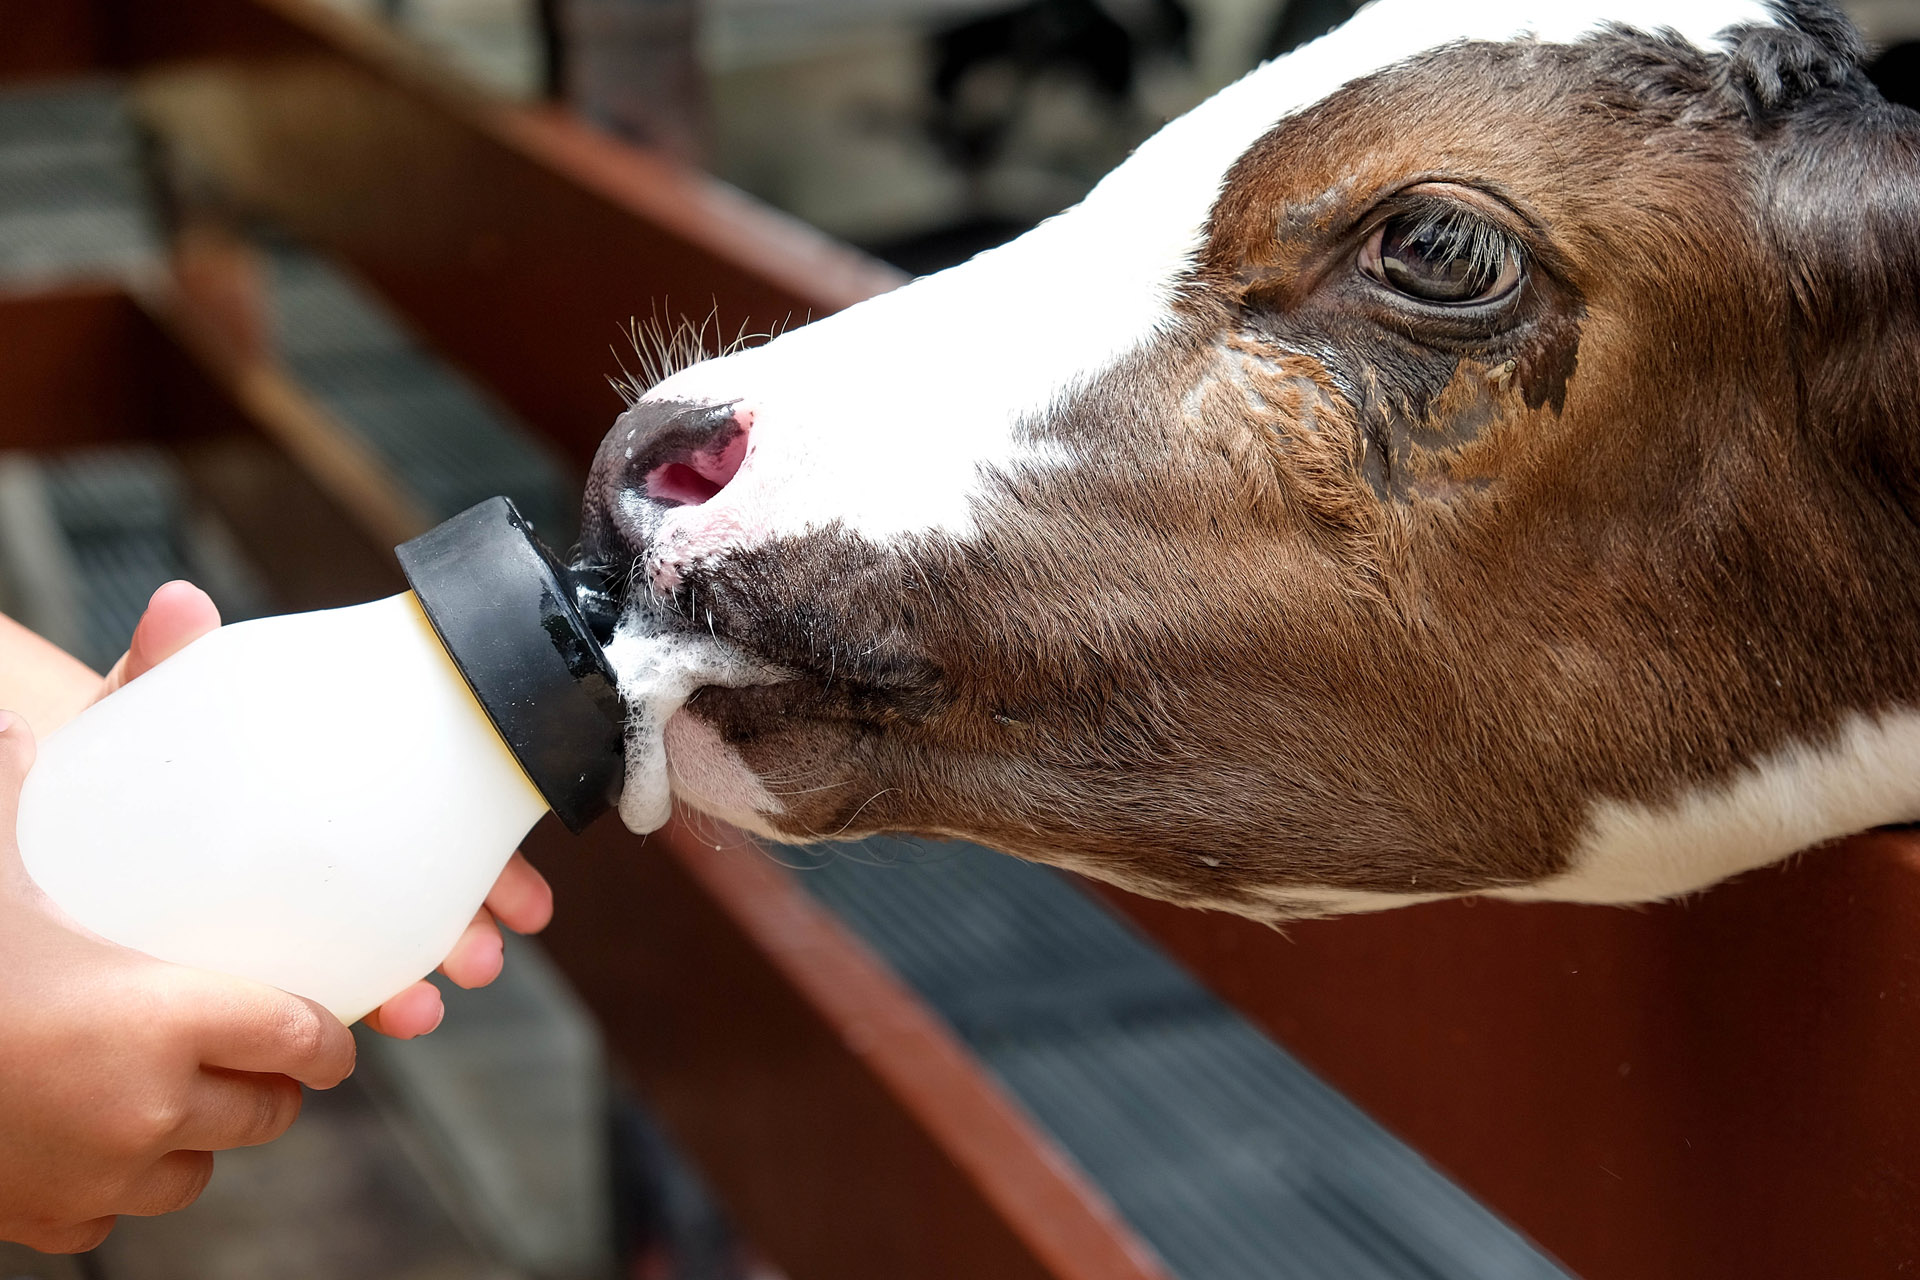 bottlefeeding a baby cow through a fence